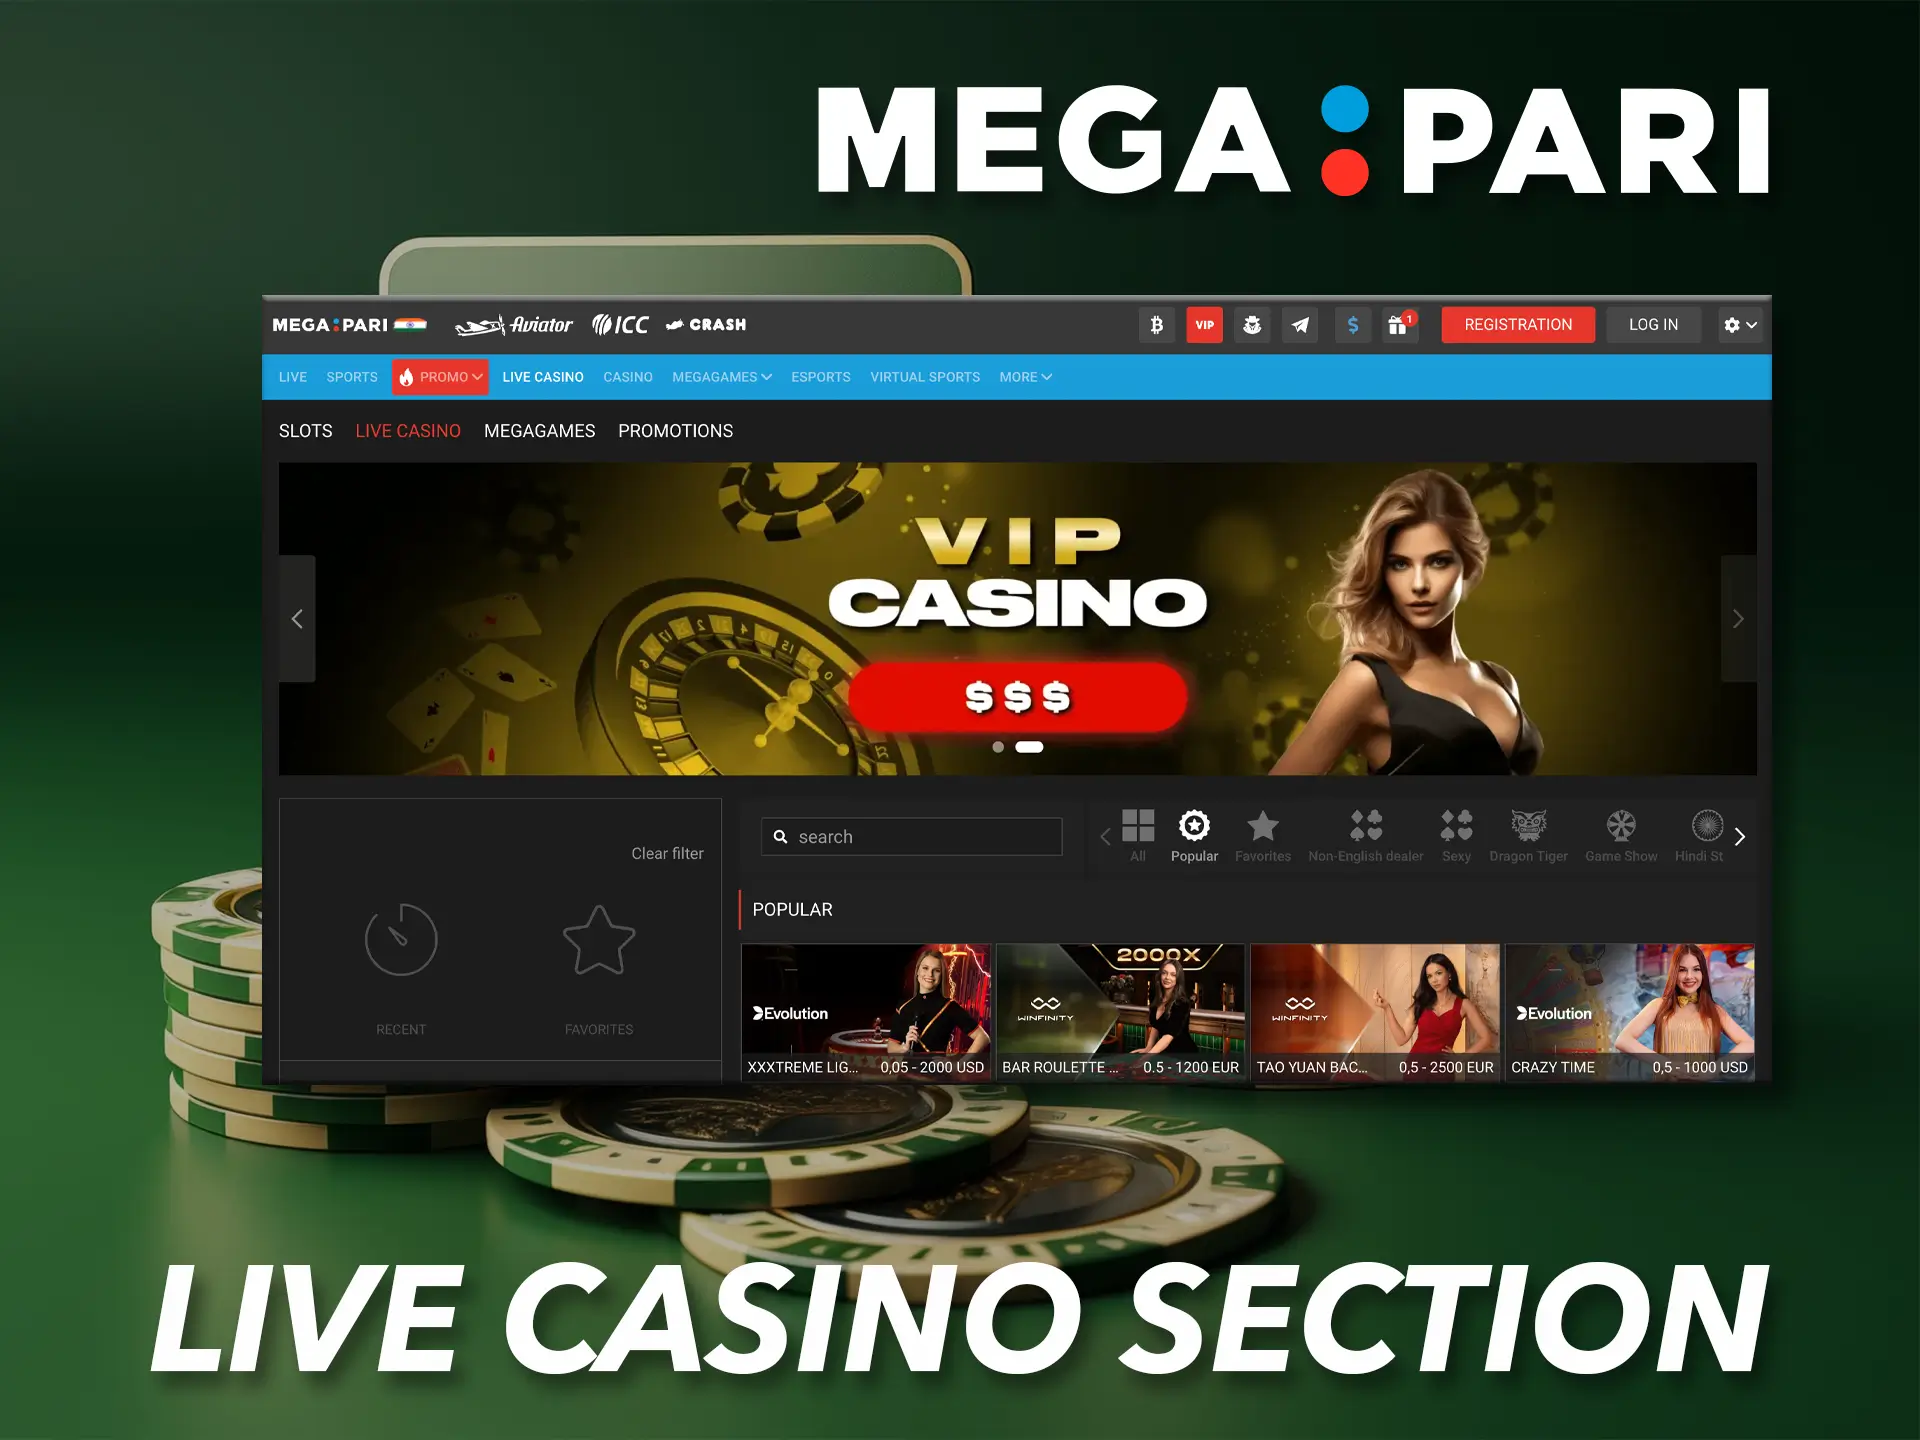 Show off your skills in the Megapari Casino dealer game.